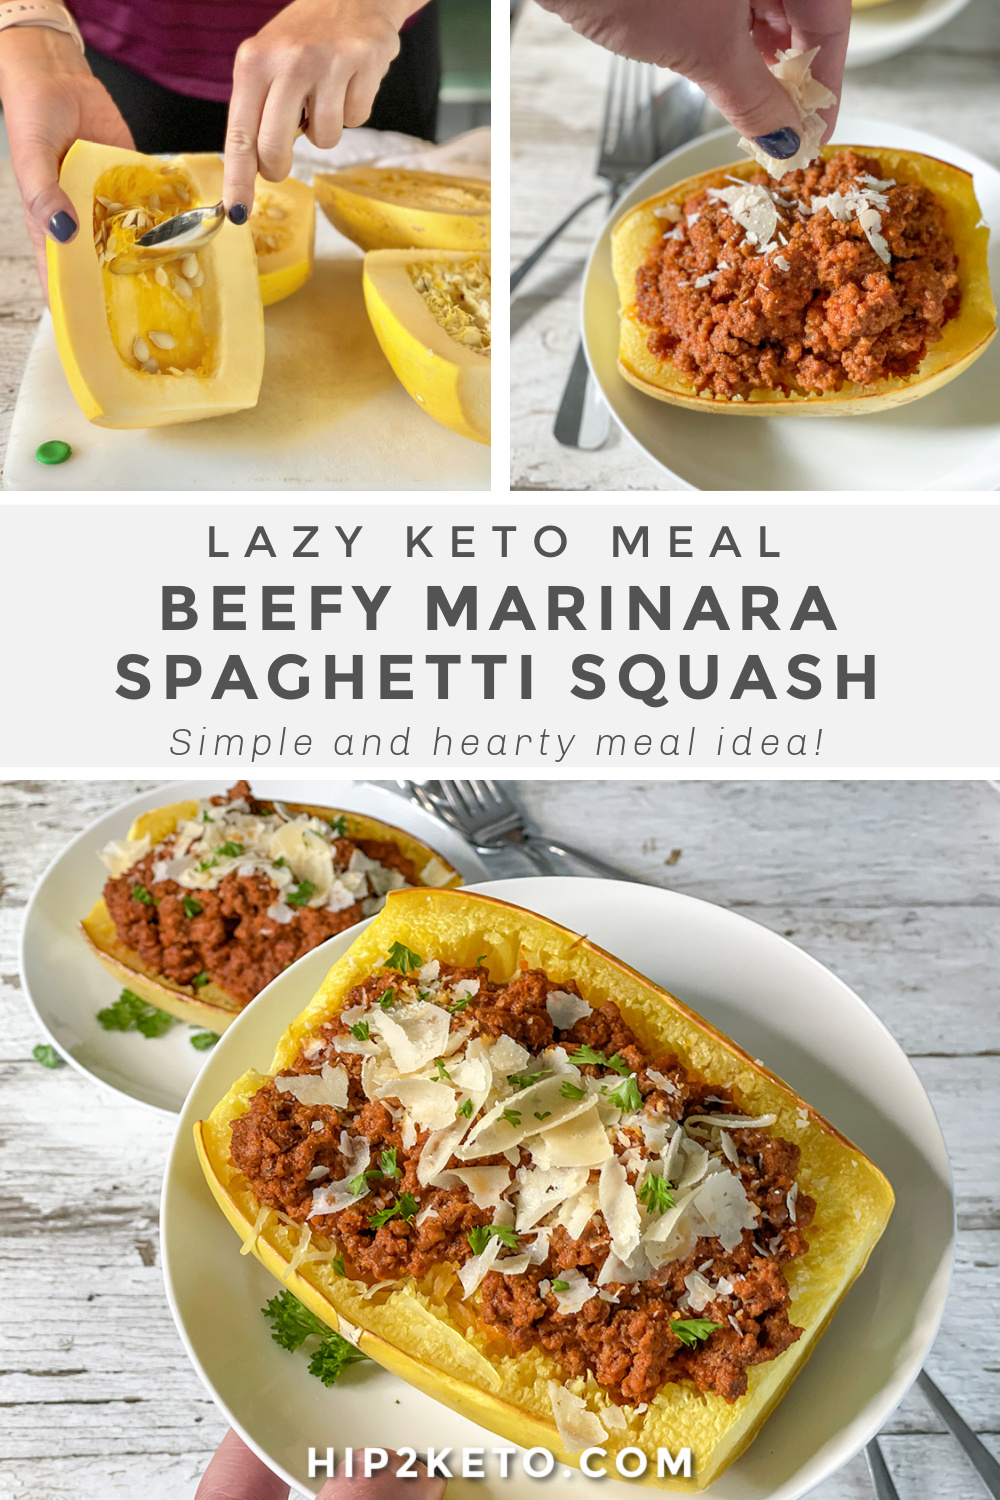 Beefy Marinara Spaghetti Squash, 4-Ingredient Lazy Keto Meal!